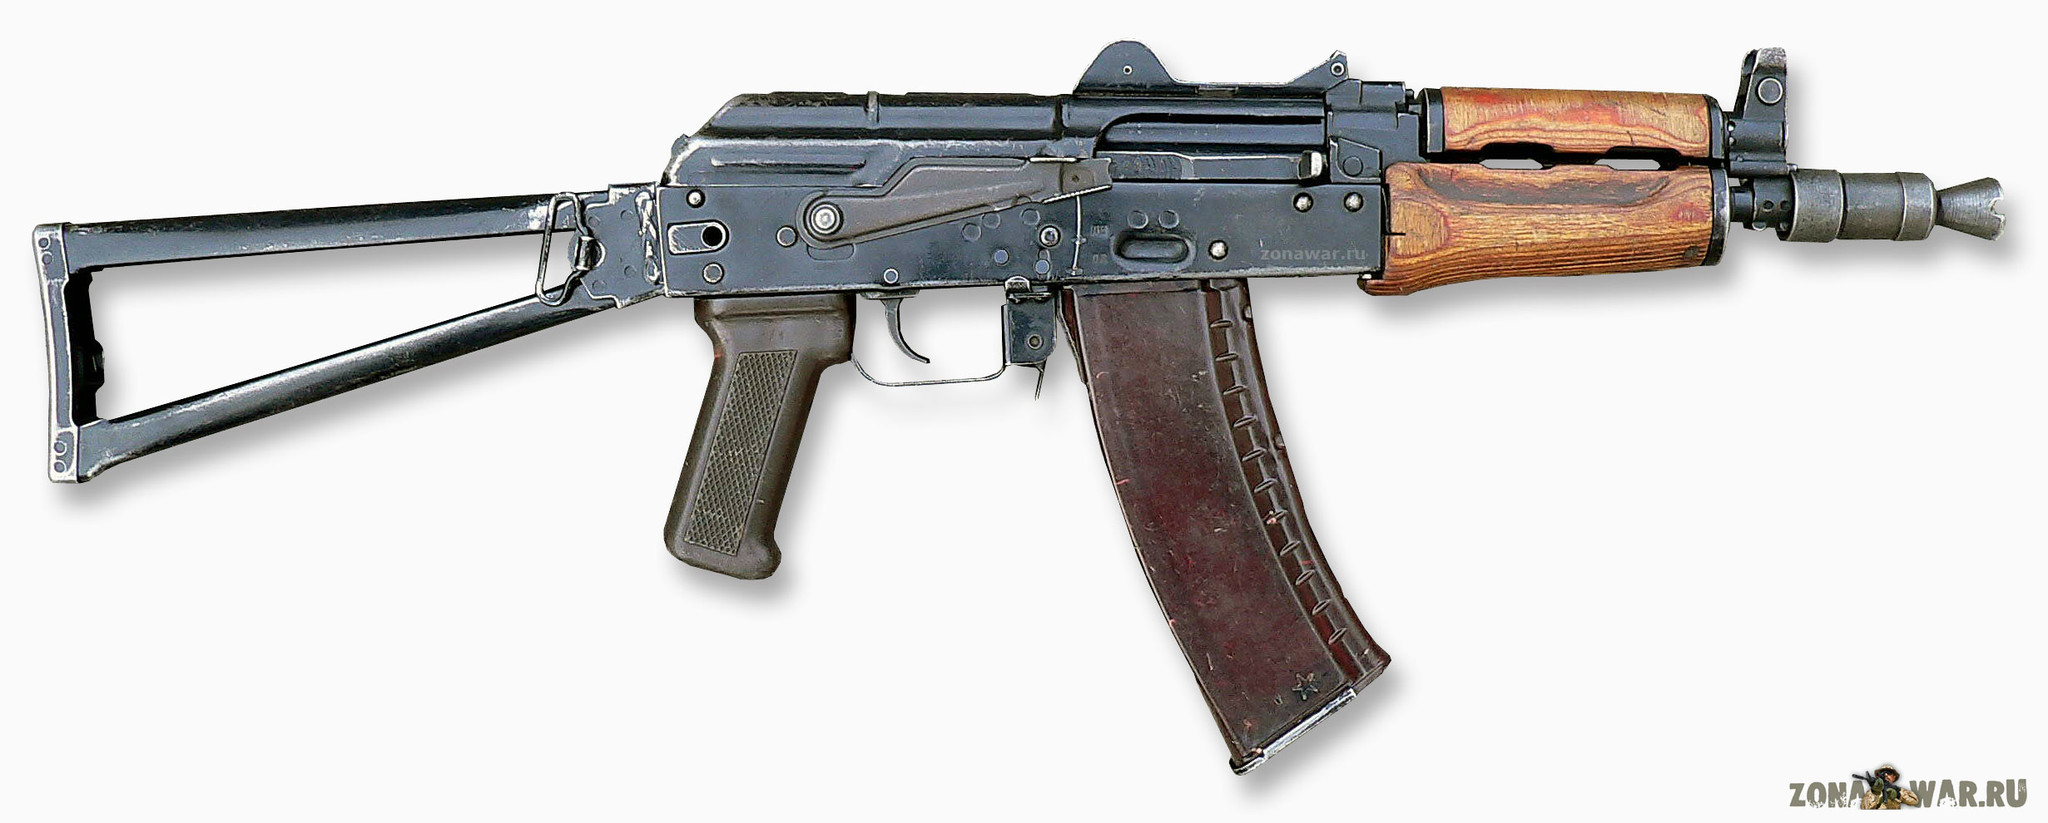 AKS-74U assault rifle